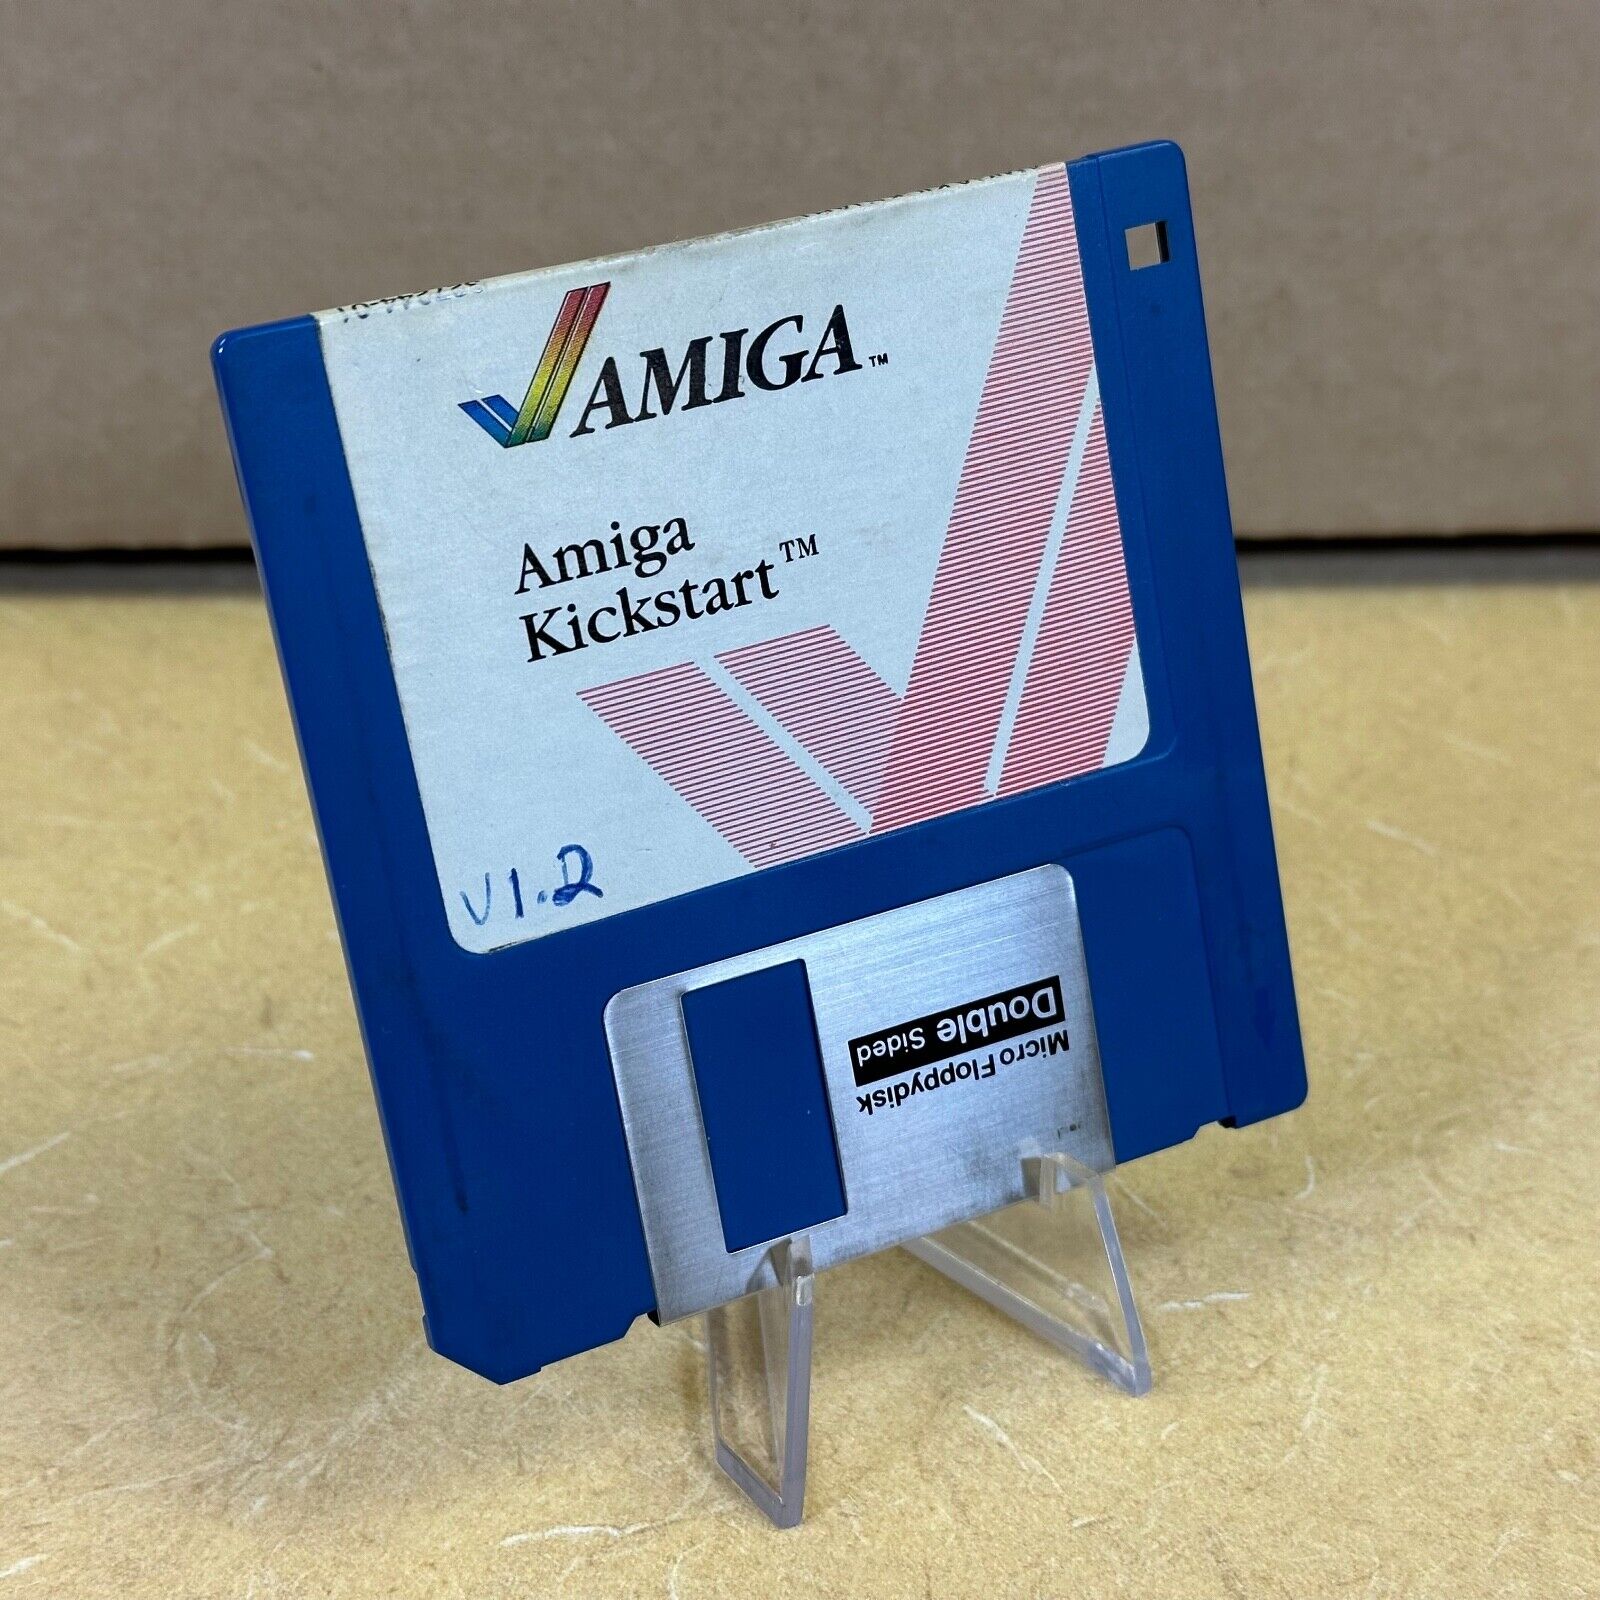 Commodore - AMIGA Kickstart disk - likely version 1.2